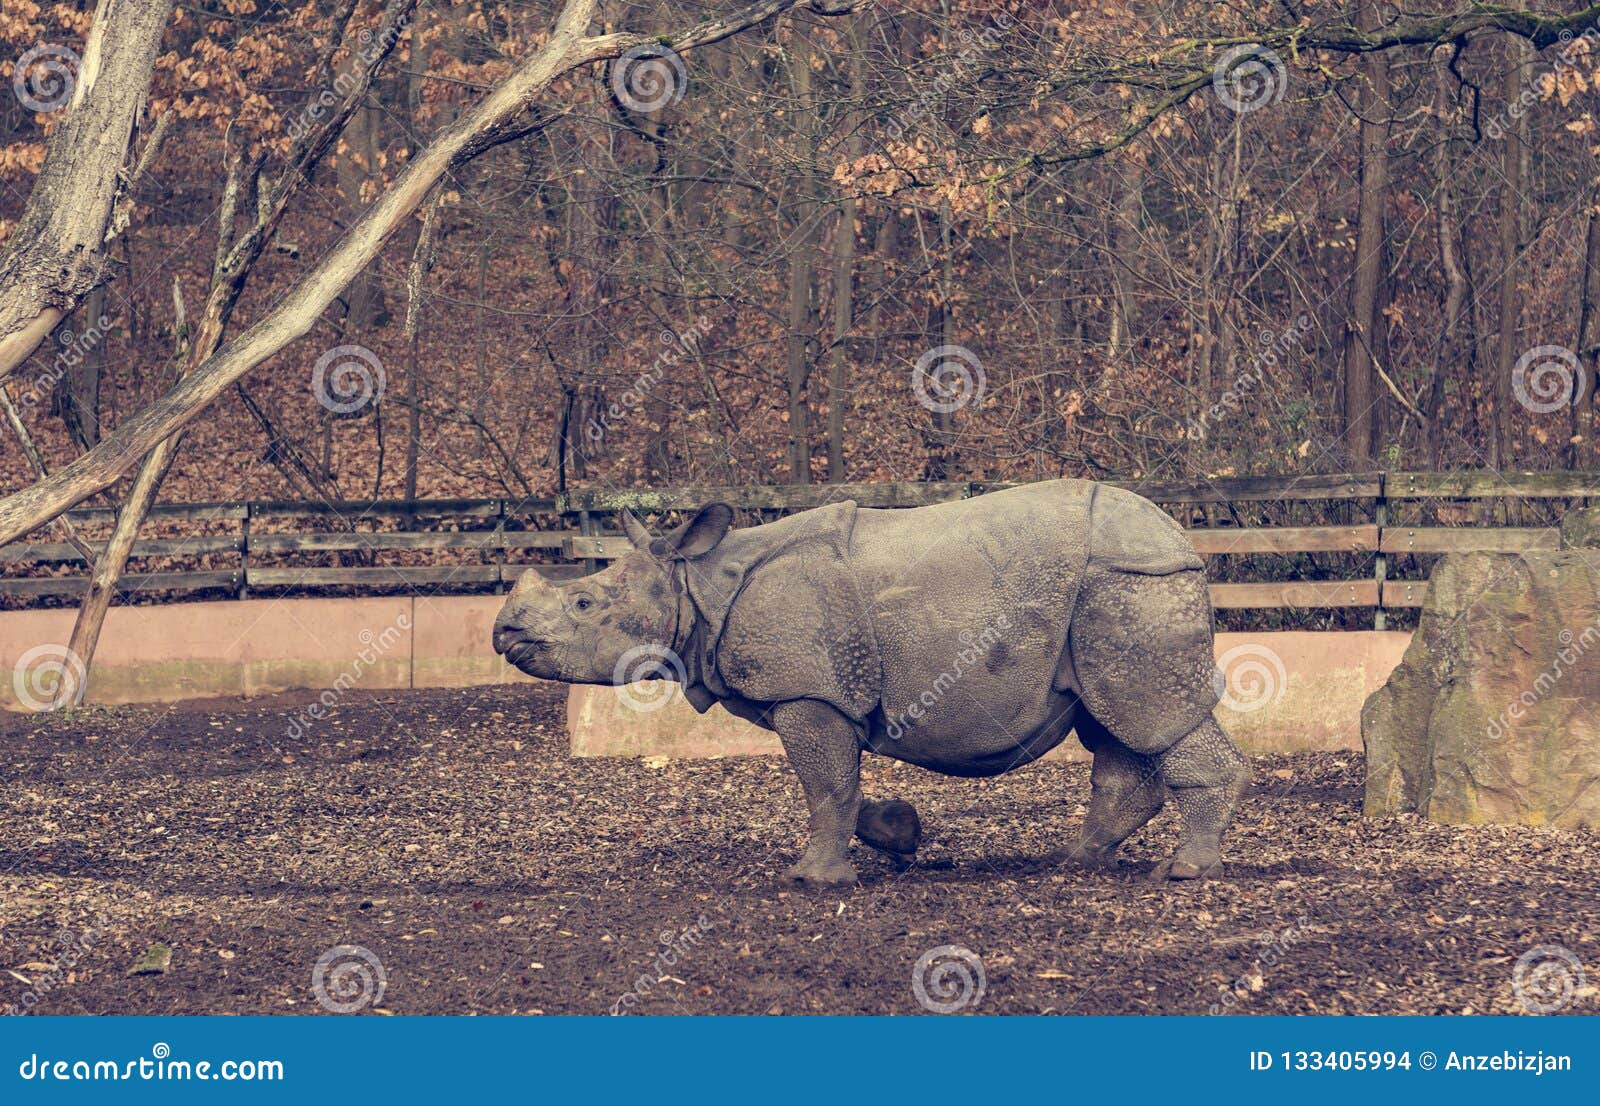 Rhinoceros Calf Walking Around Man Made Habitat in Zoo. Stock Photo - Image  of protection, retrol: 133405994